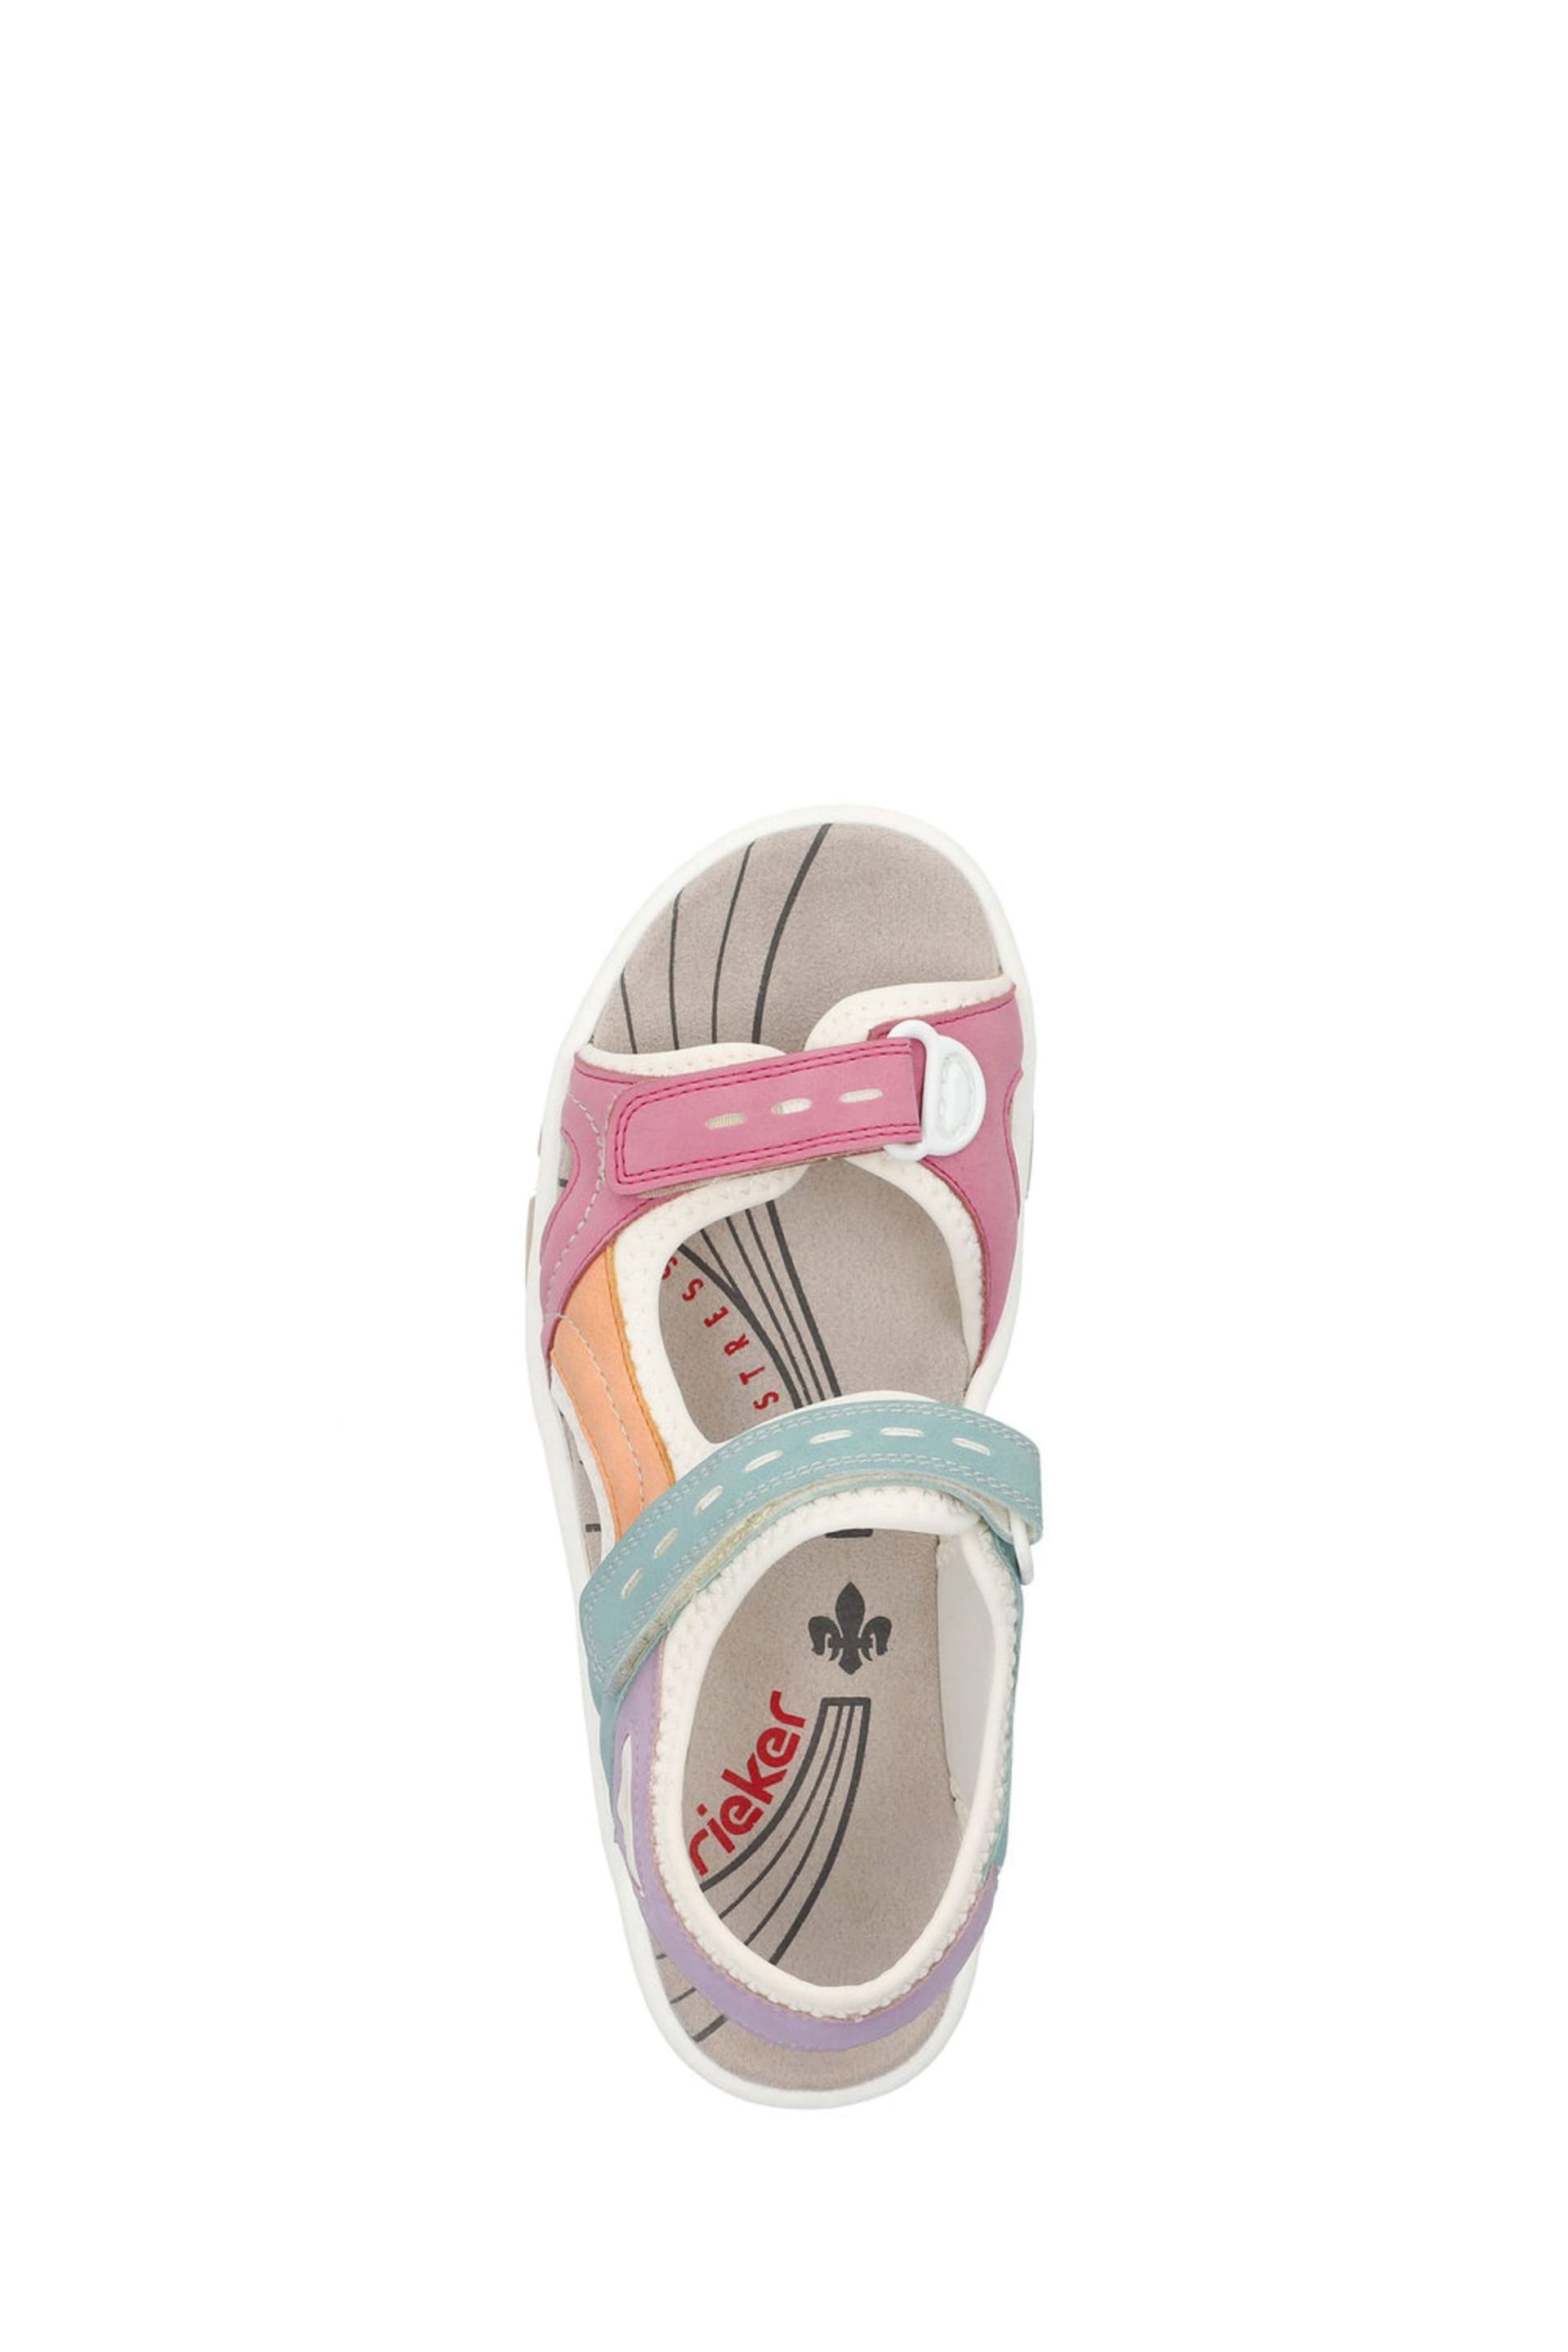 Rieker Womens Pink Bur Fastener Sandals - Image 8 of 10